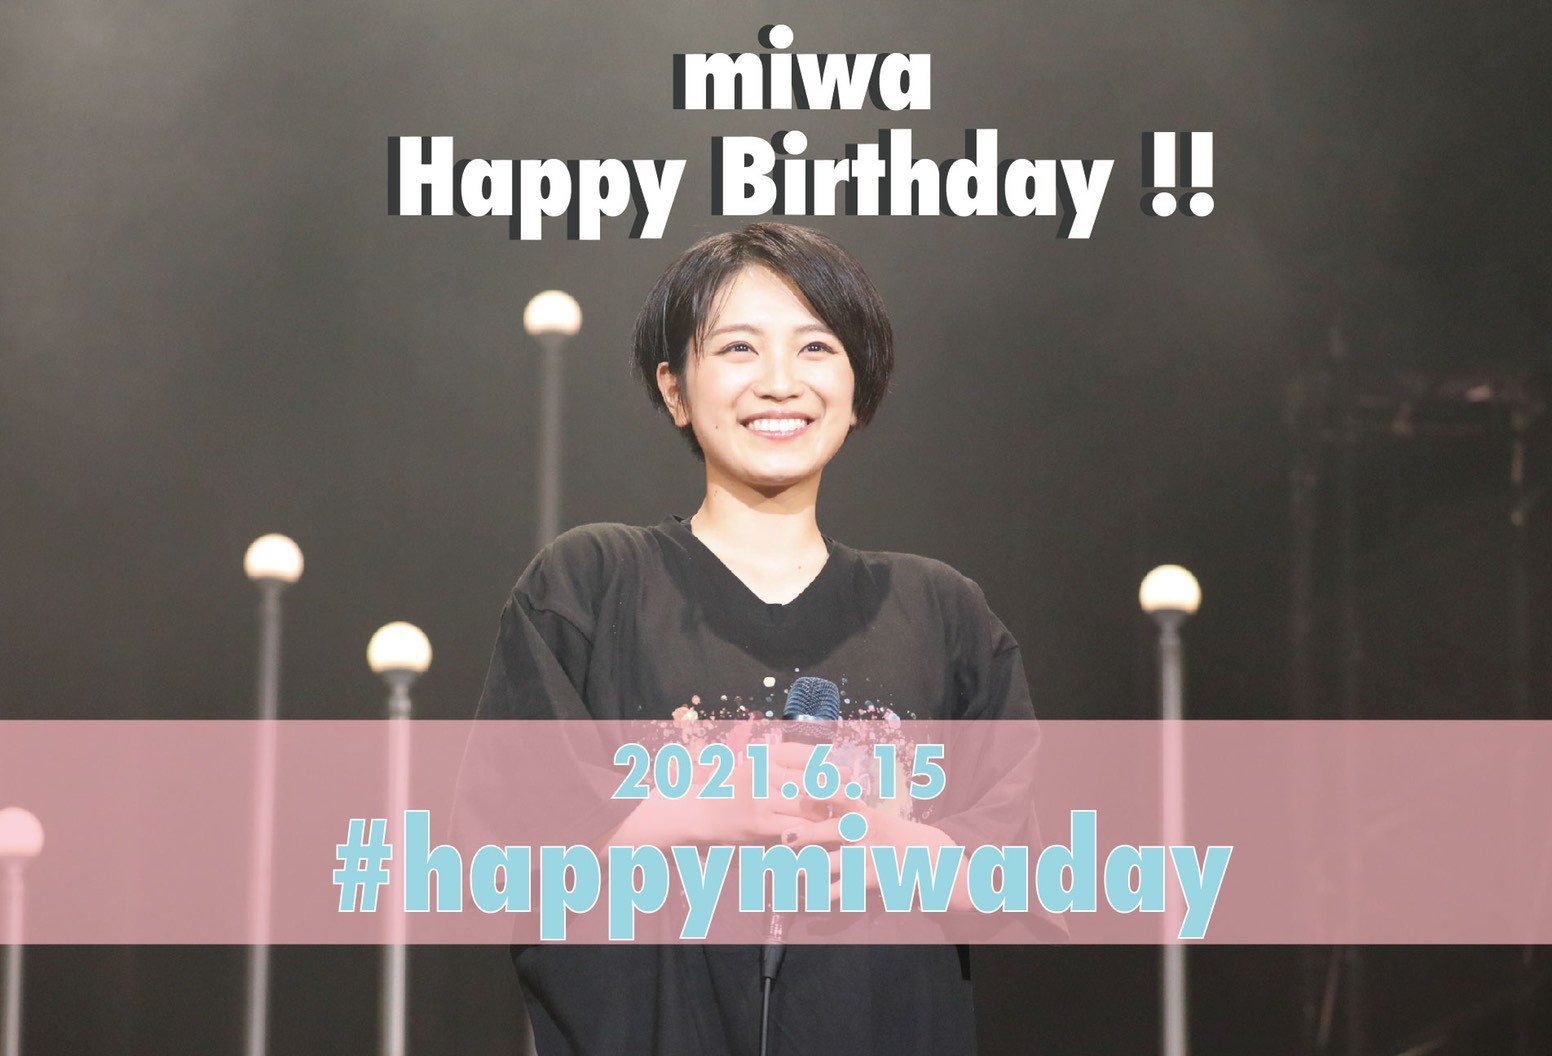 Miwaスタッフ 公式 21 6 15 Happy Birthday Miwa 本日は Happymiwaday 近々嬉しいお知らせも待ってます Miwa生誕祭 Miwa誕生日